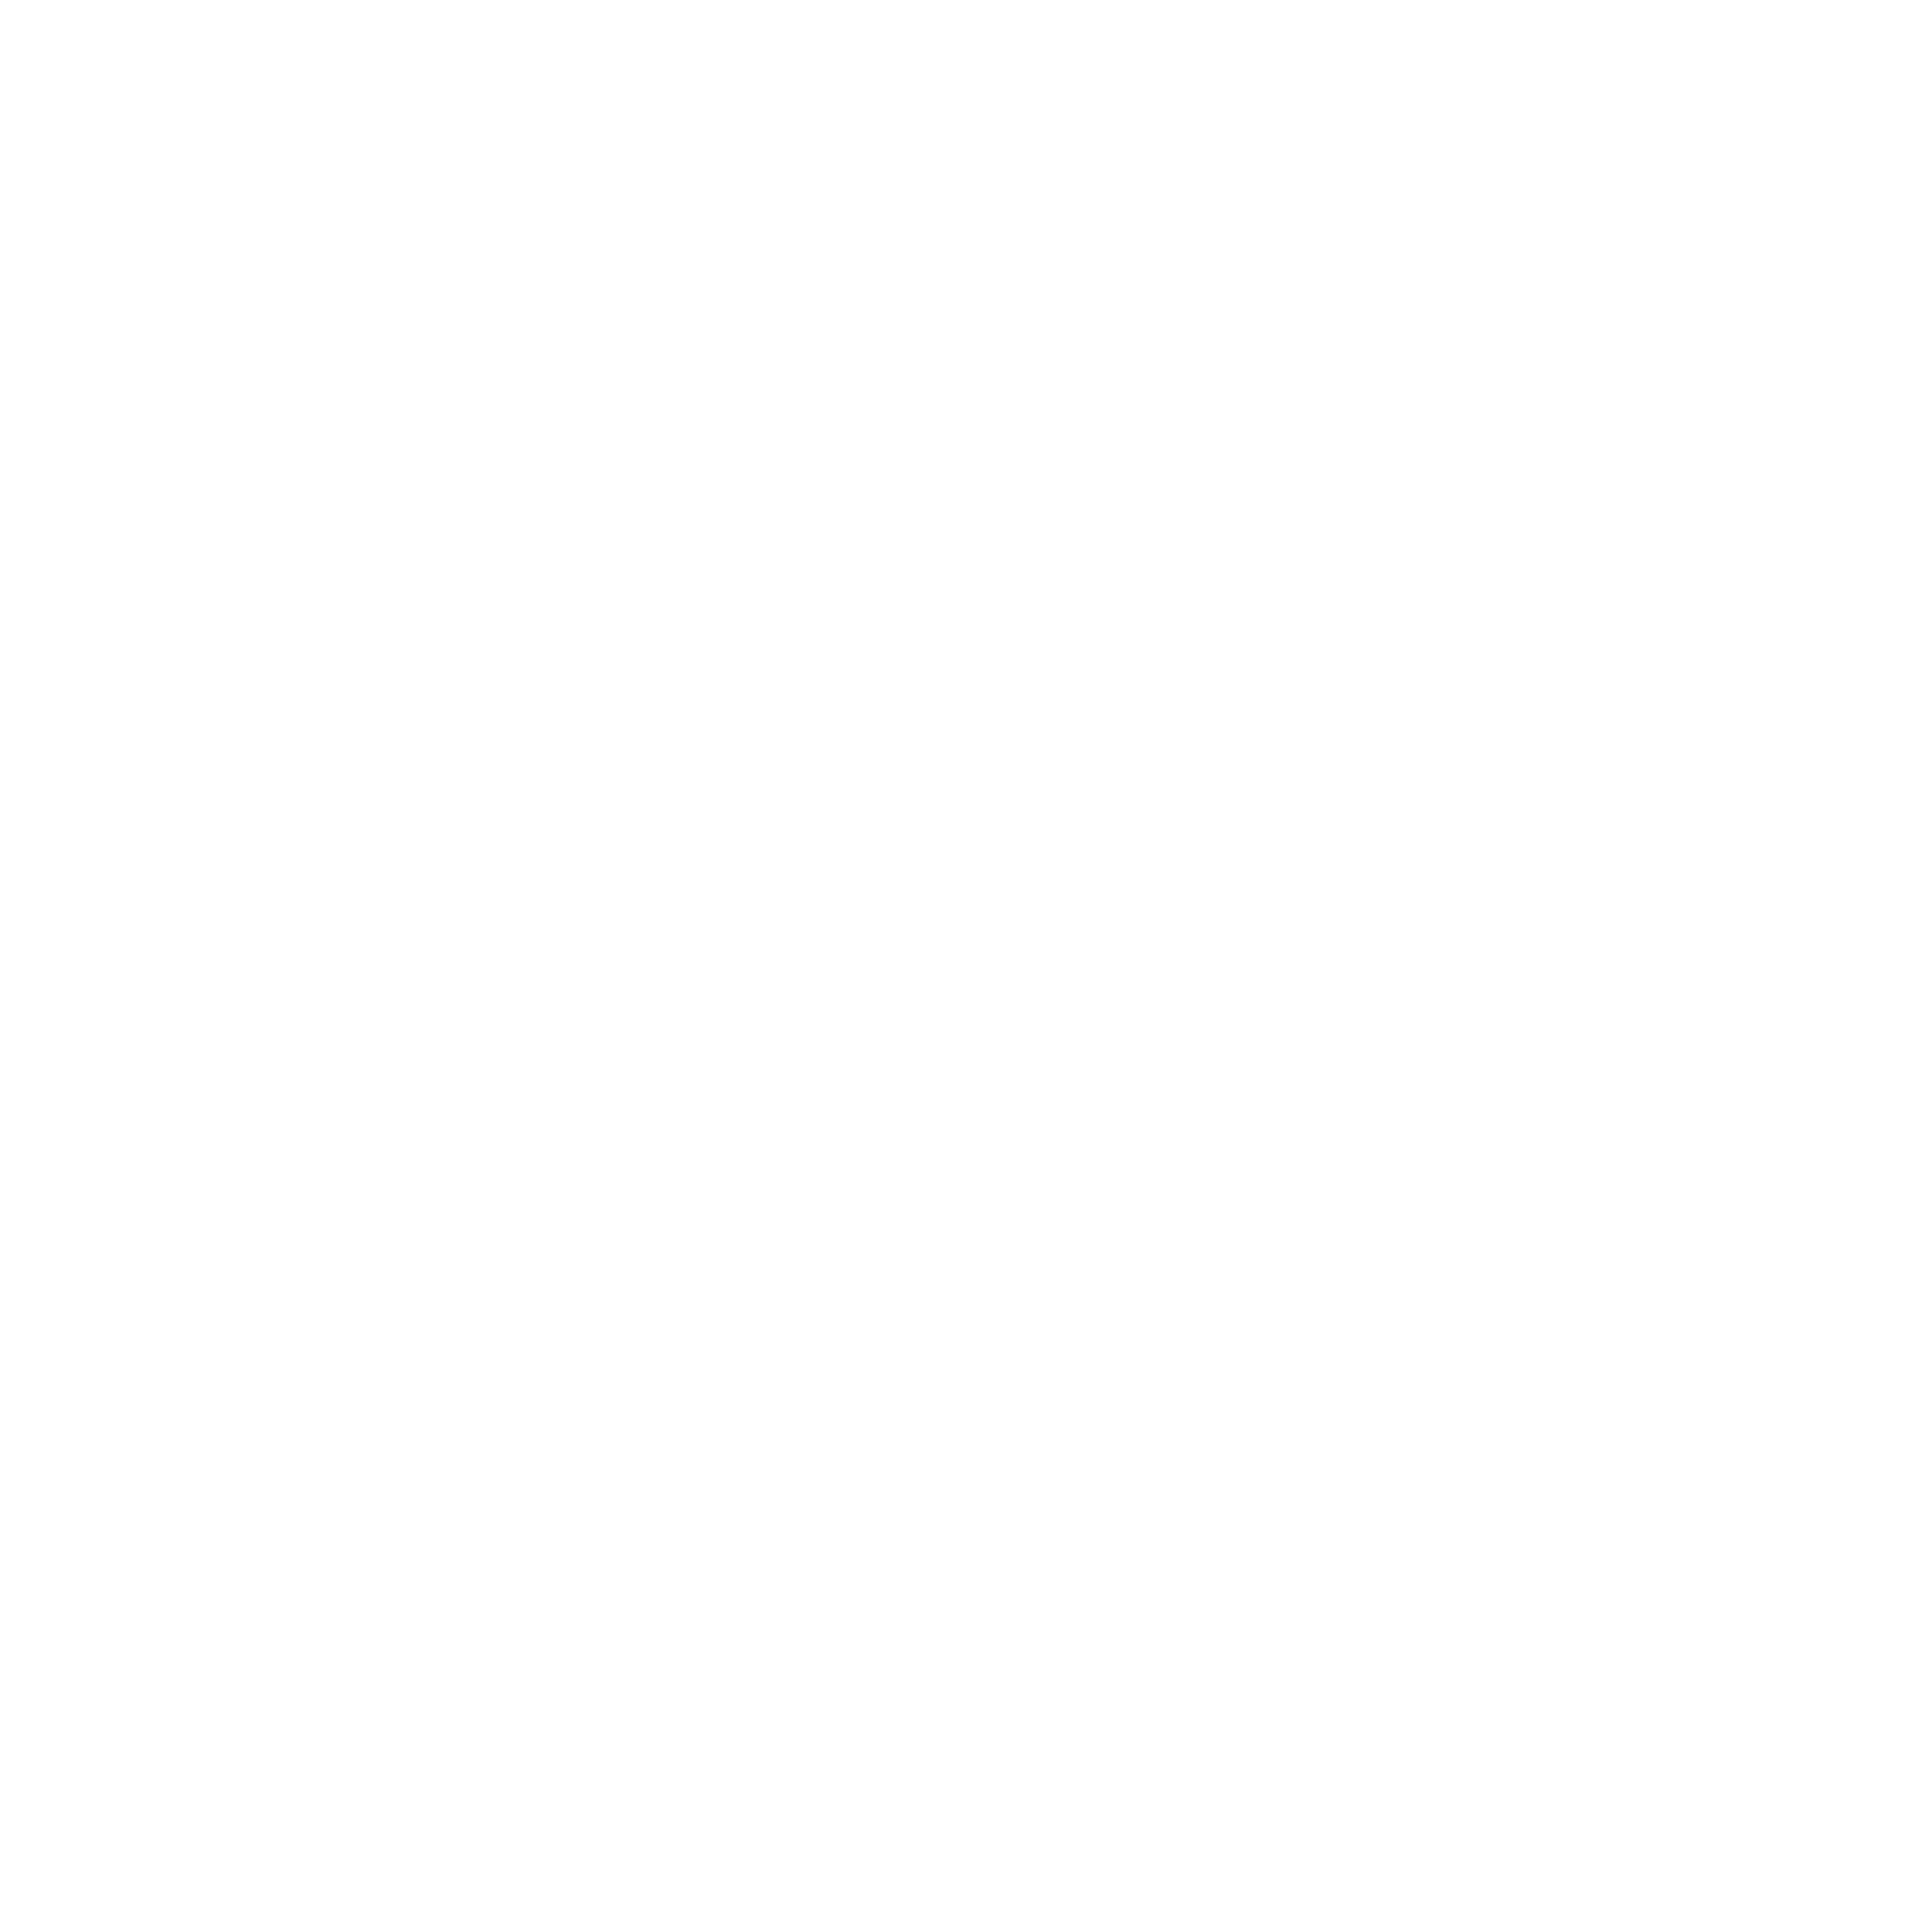 Damm Logo Transparent Picture